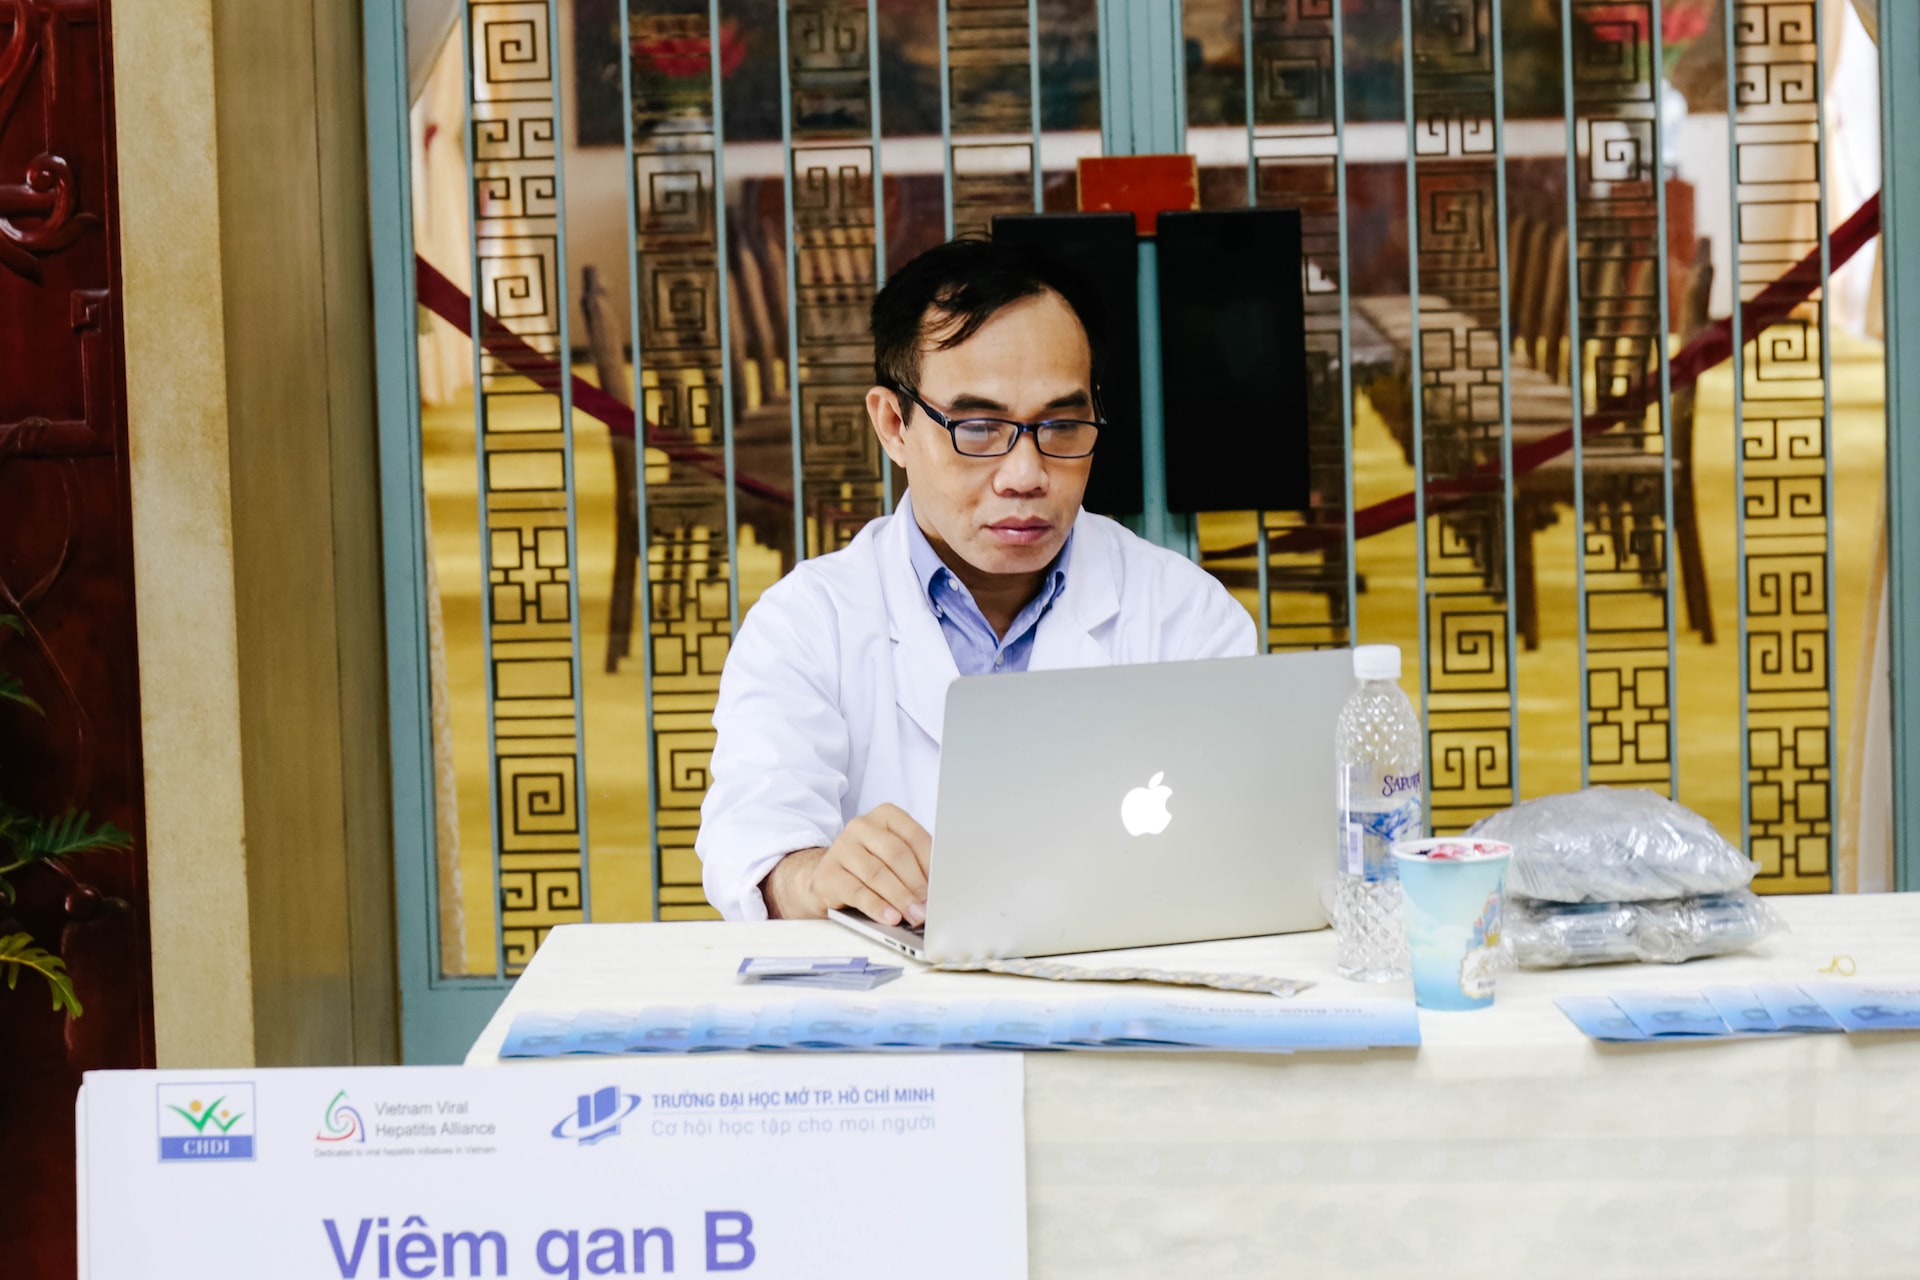 Doctor using a laptop in vietnam